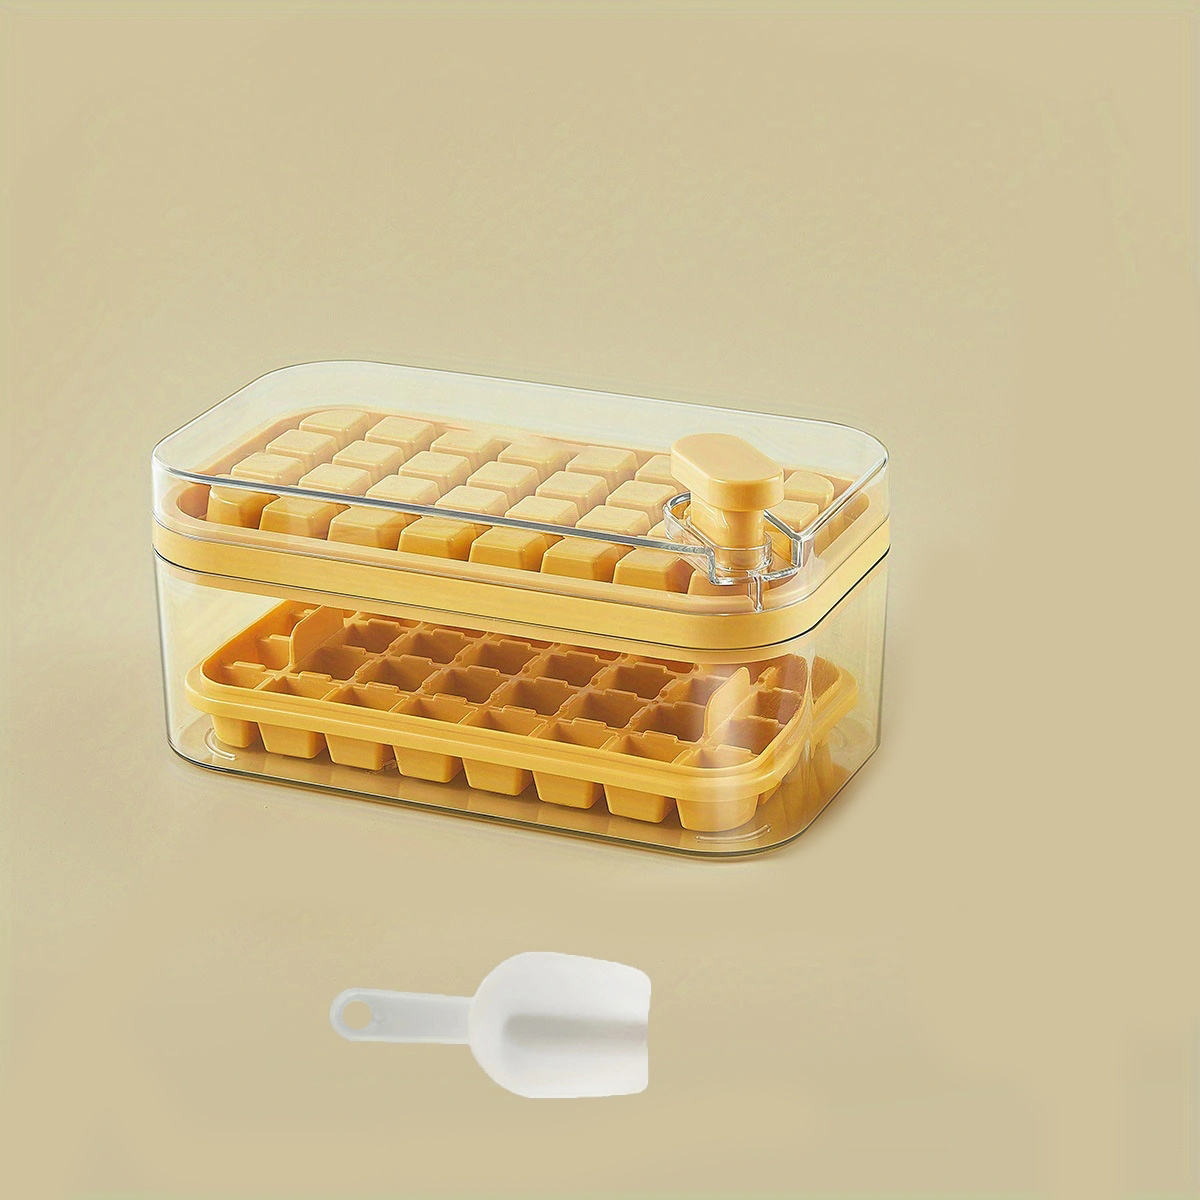 Square Ice Cube Tray With Storage Box One-button Press علبه ثلج